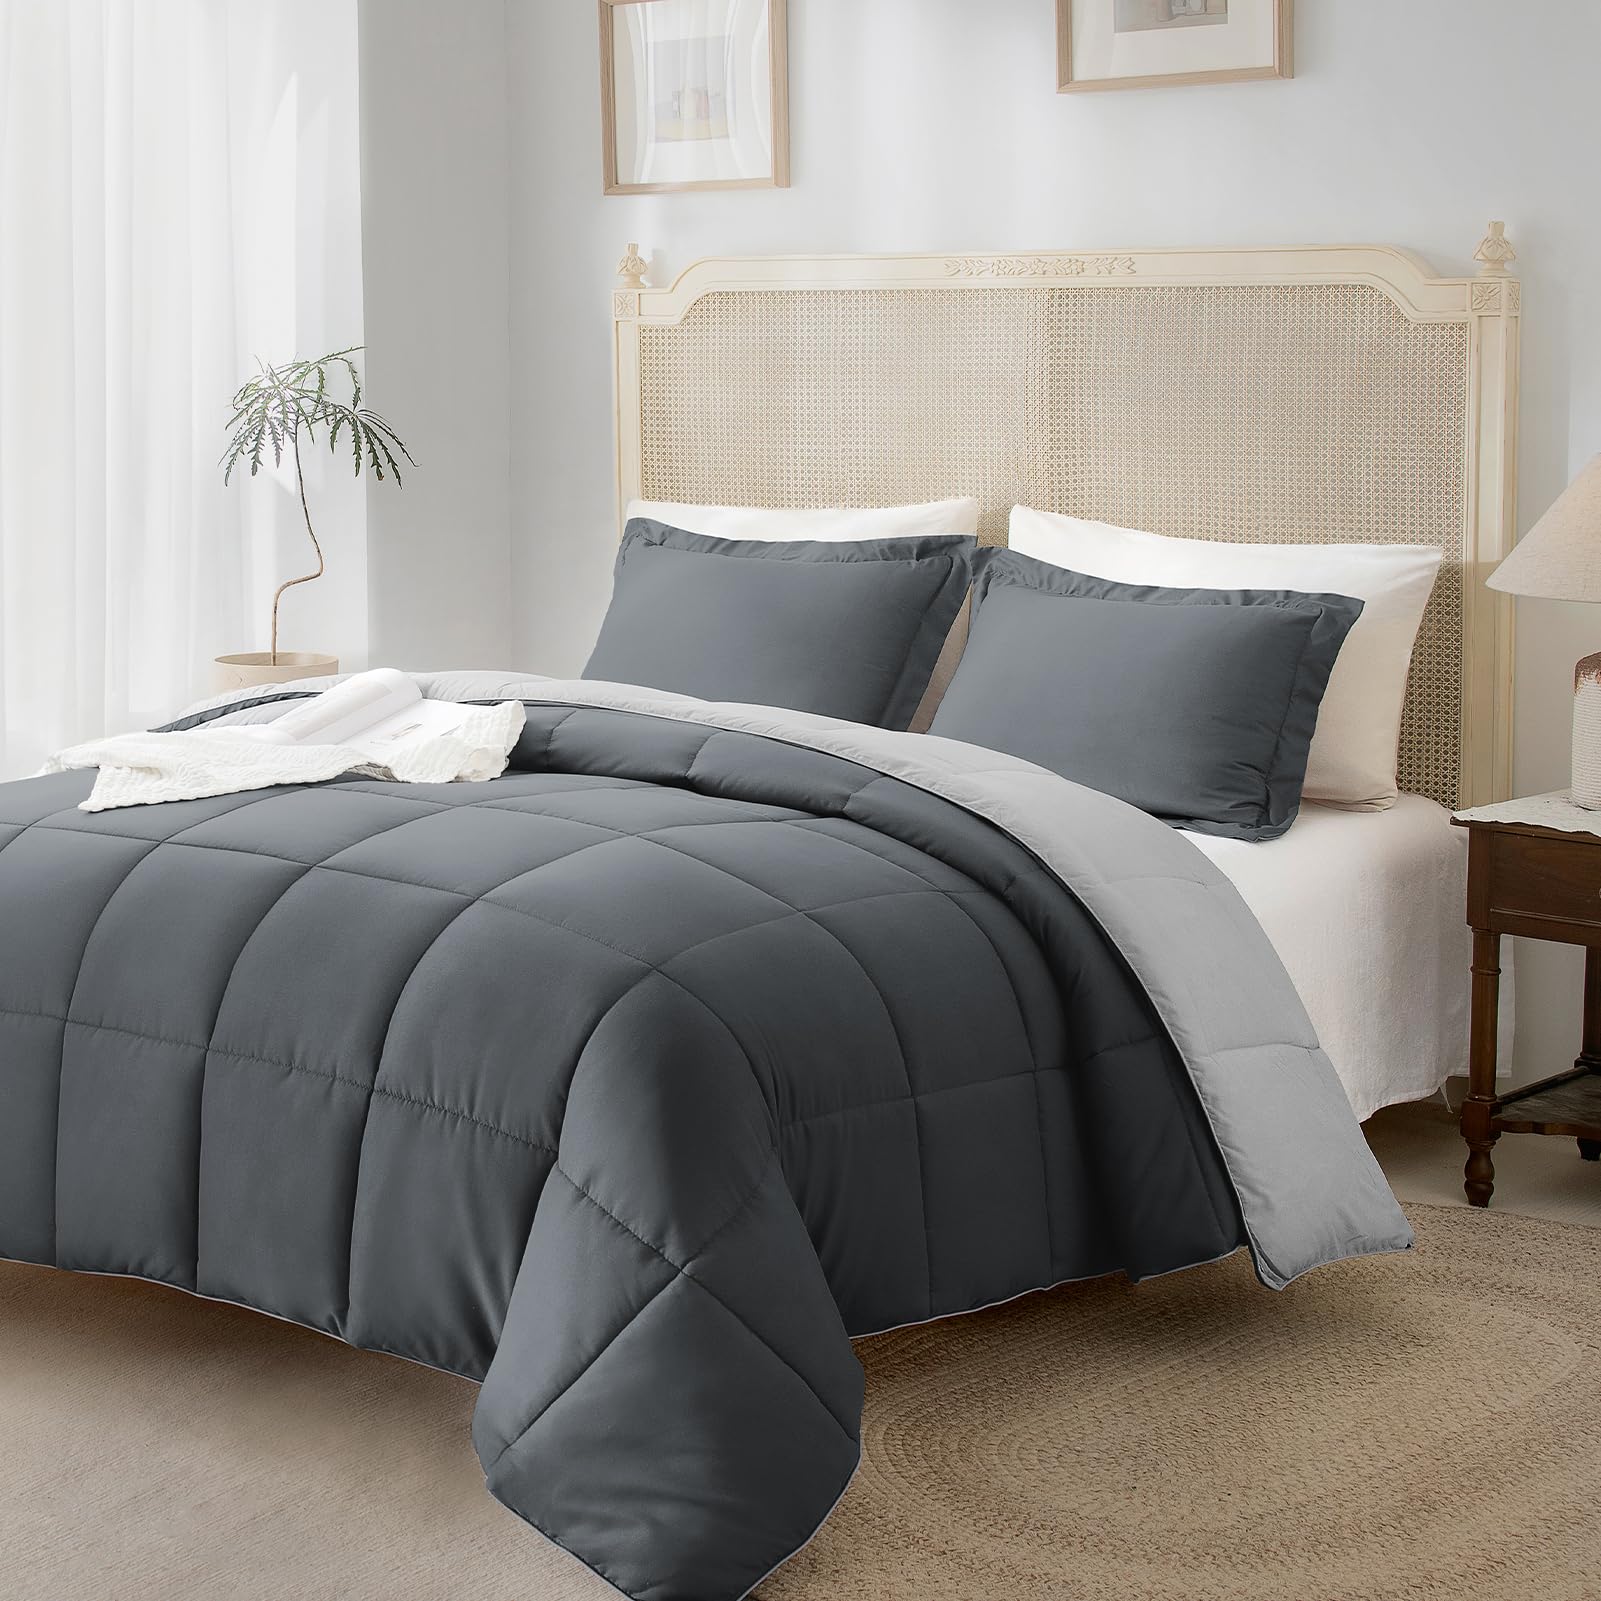 satisomnia California King Comforter Set Grey, Lightweight Cal King Comforter Bed Sets, 3 Pieces Down Alternative Bedding Comfor